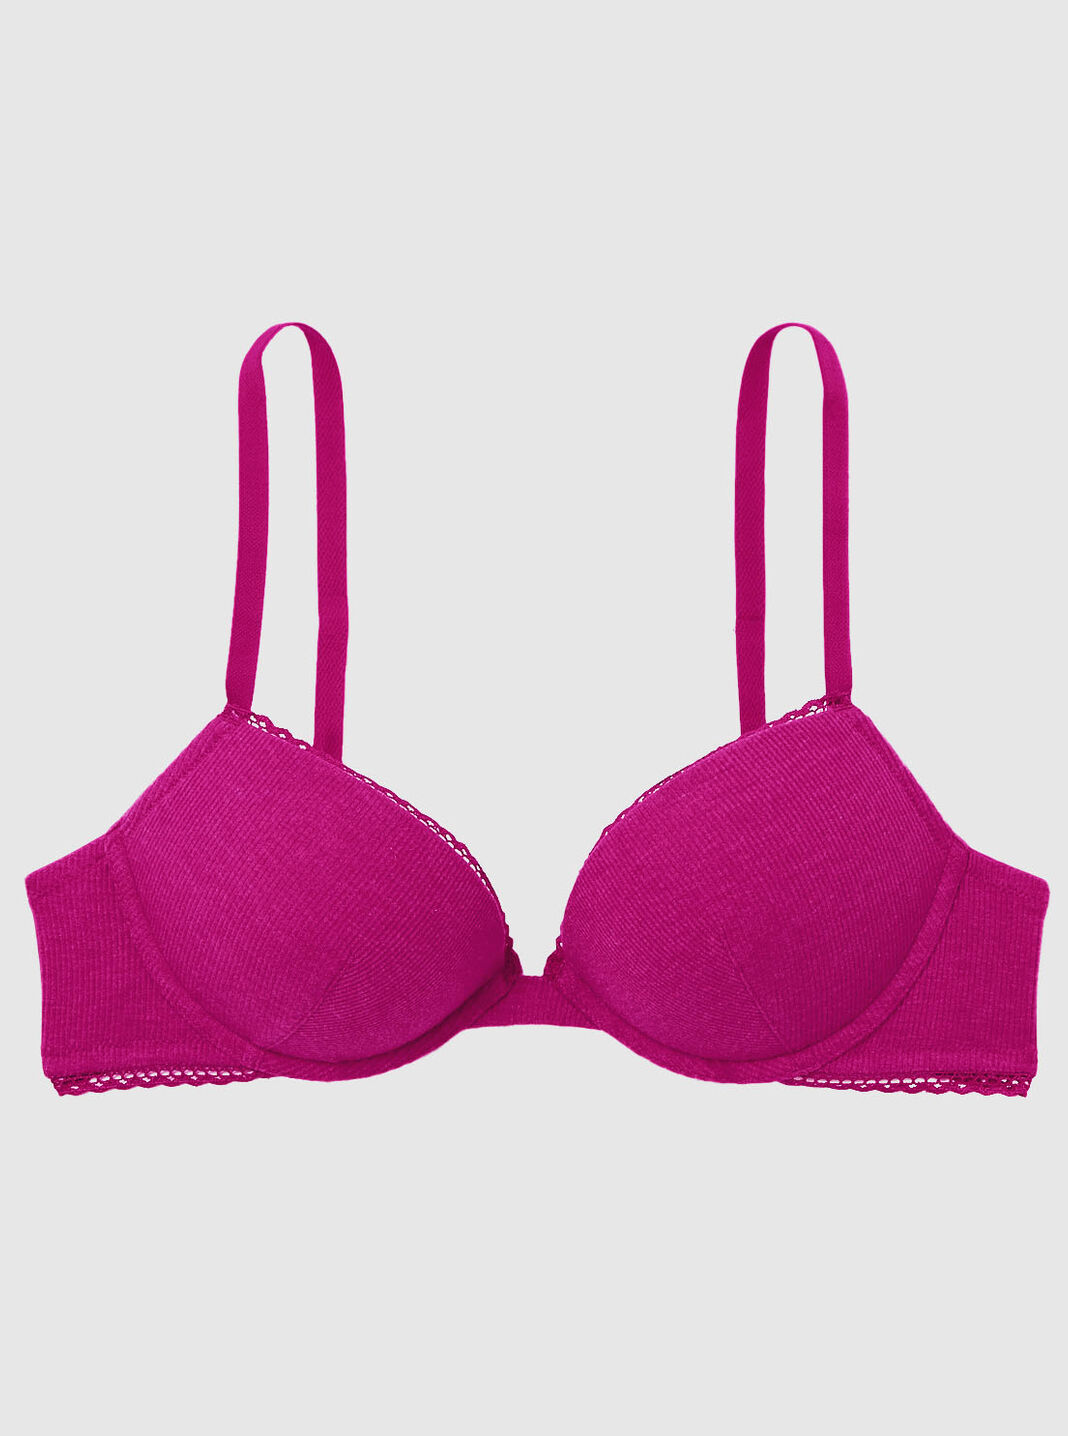 Big bust lingerie bra thin cotton glossy push up adjustable women underwear  36 38 40 42 44 46 B C D E large cup cotton bra C3302